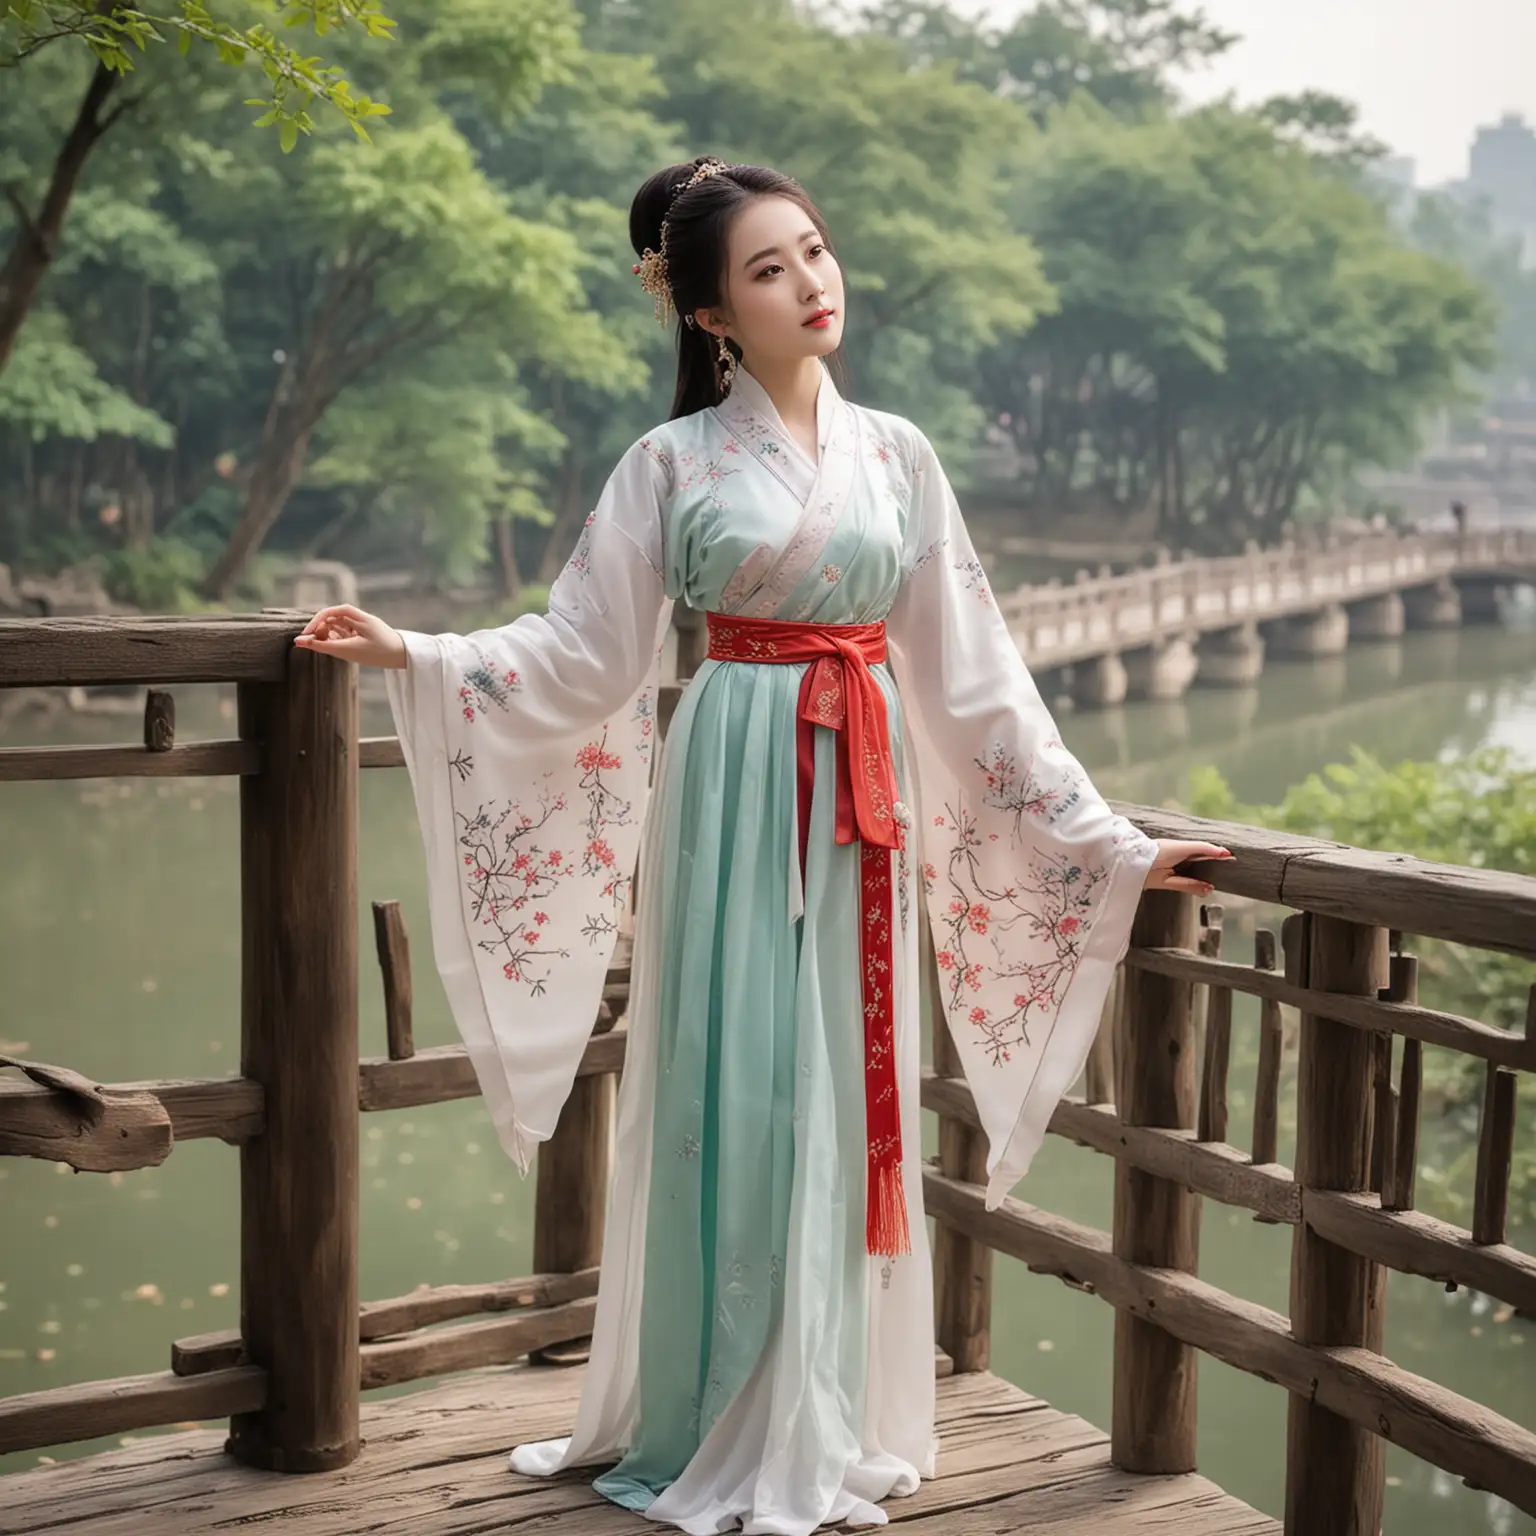 Chinese-Classical-Beauty-in-Hanfu-on-a-Bridge